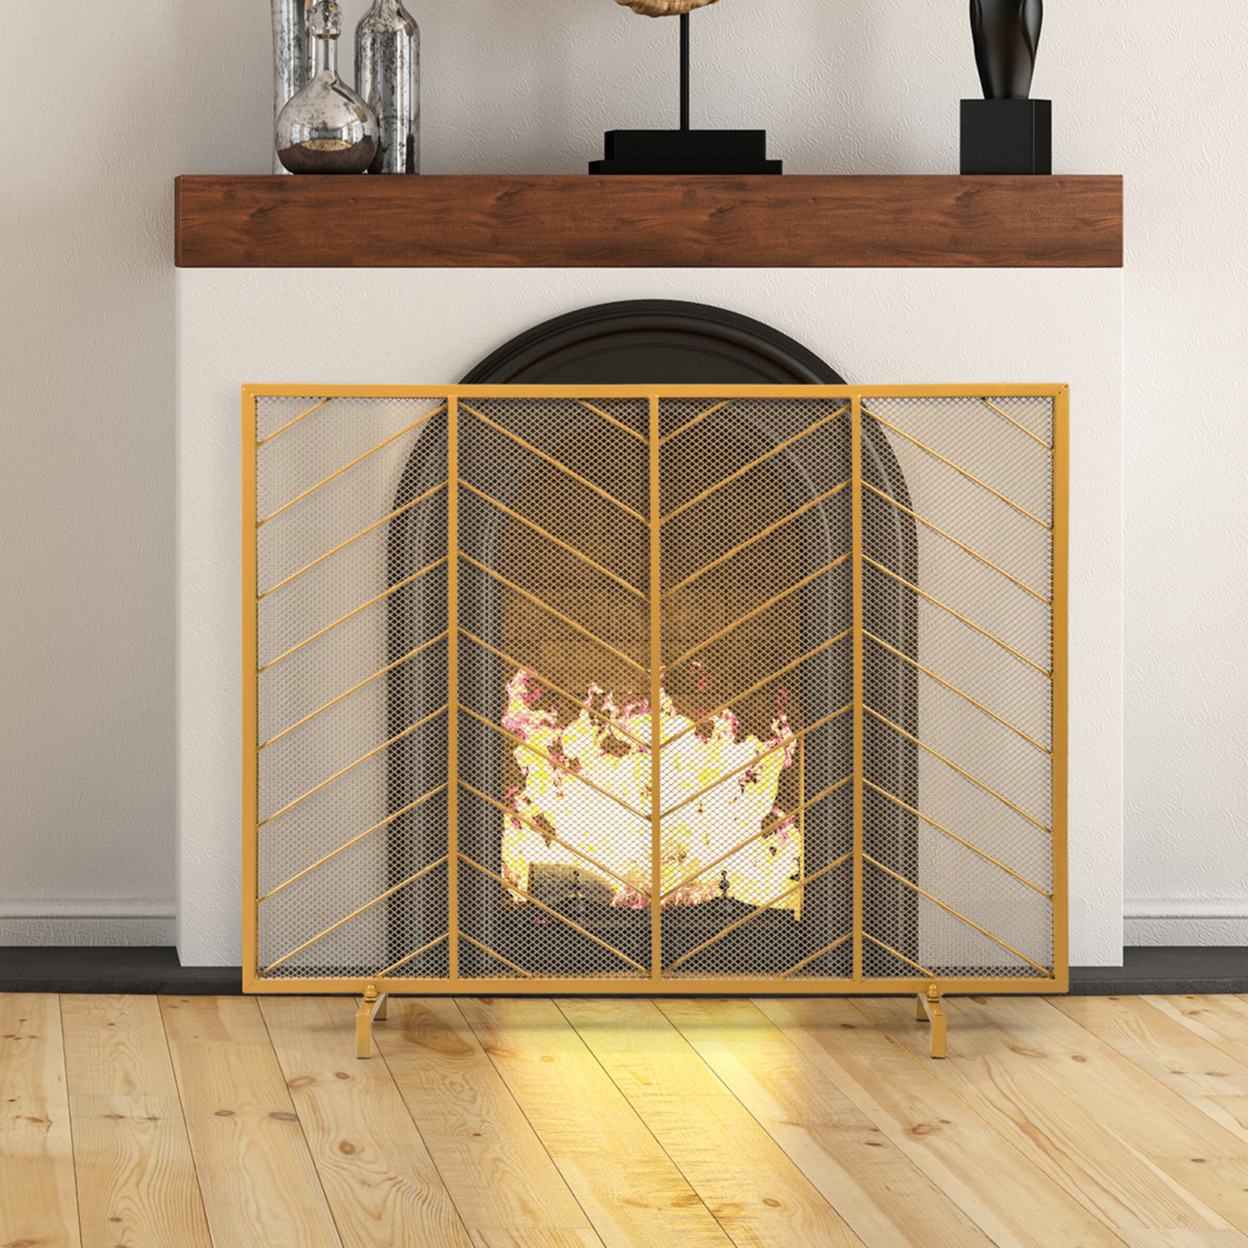 39''x31'' Single Panel Fireplace Screen Spark Guard Fence Chevron Gold Finish